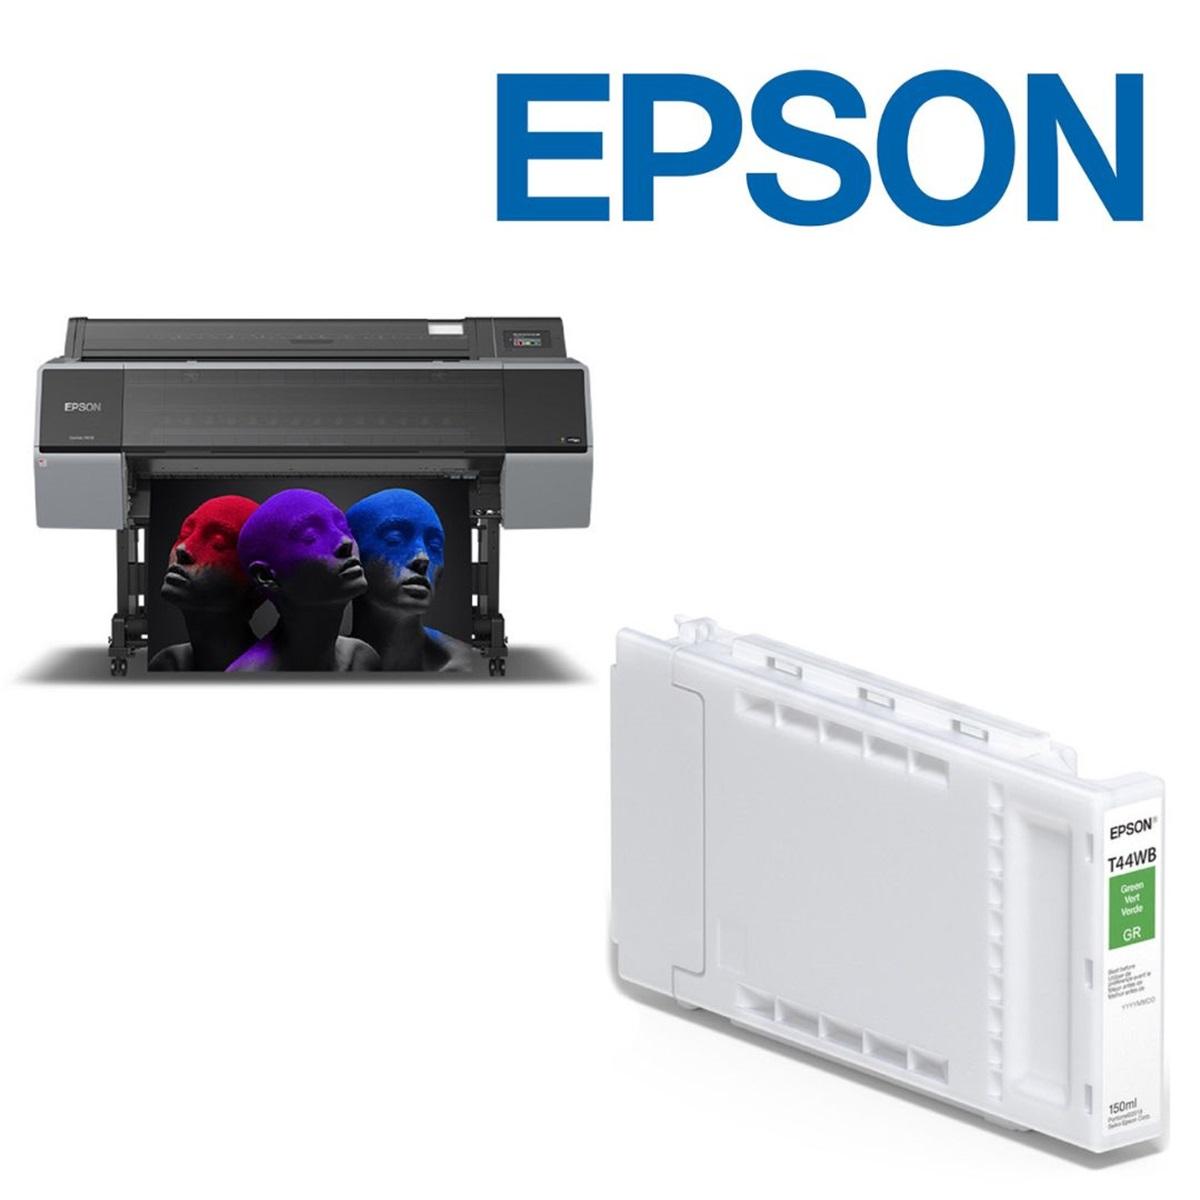 Epson UltraChrome Pro 12, T44W, 150ml Inks